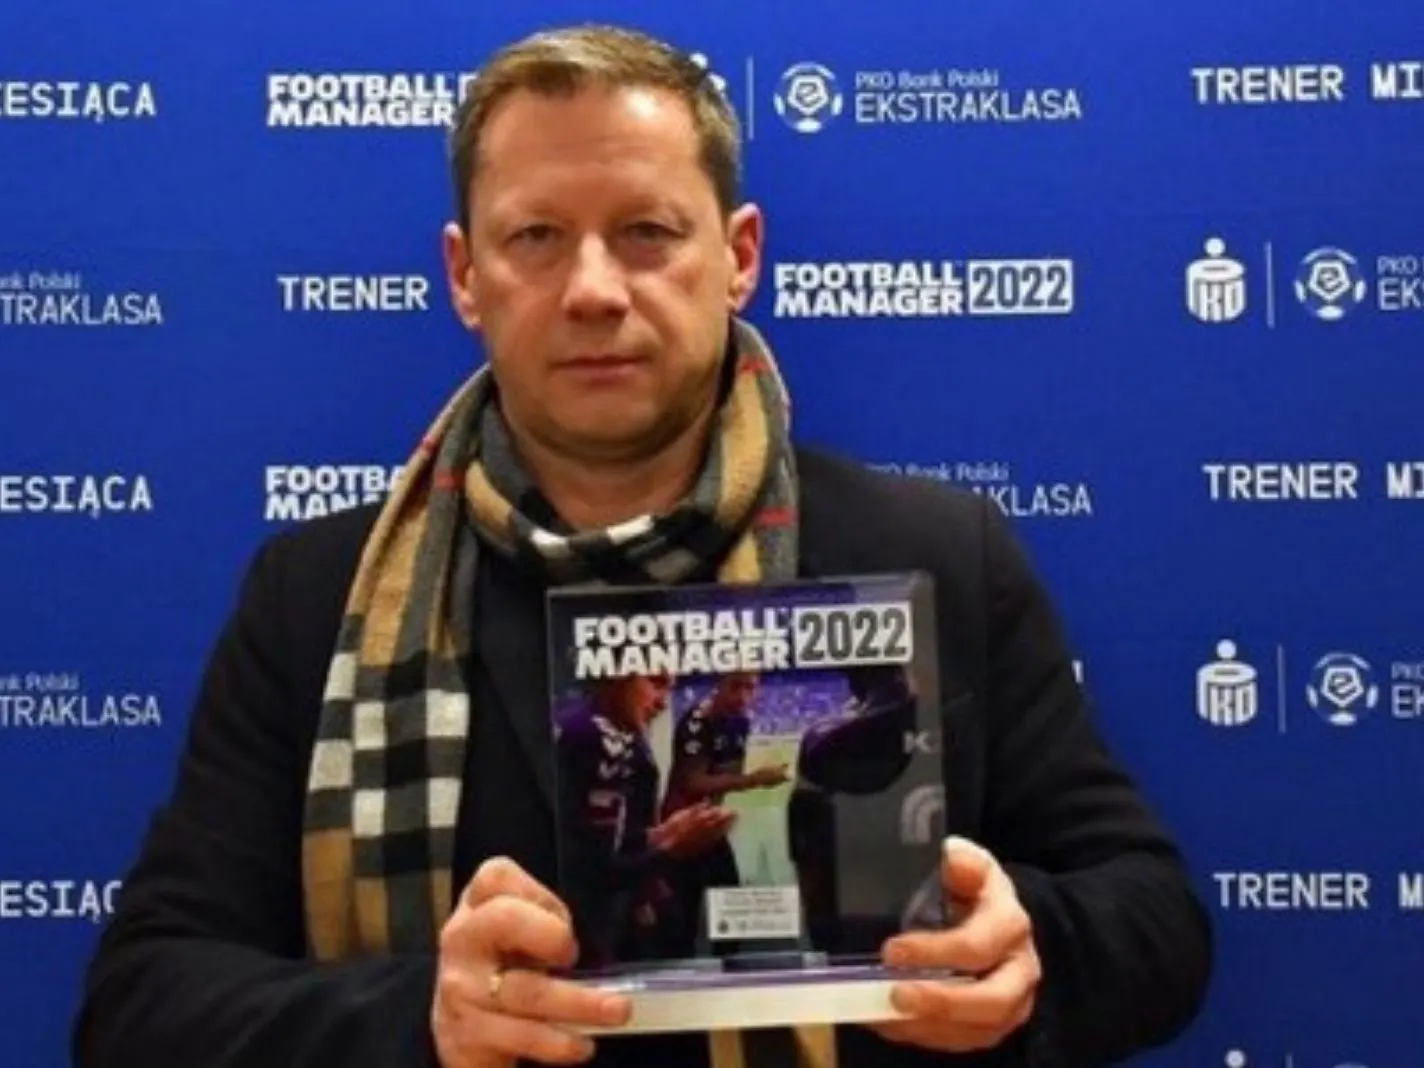 Dariusz Banasik shows off his copy of FM22 after winning November’s manager of the month award in Ekstraklasa